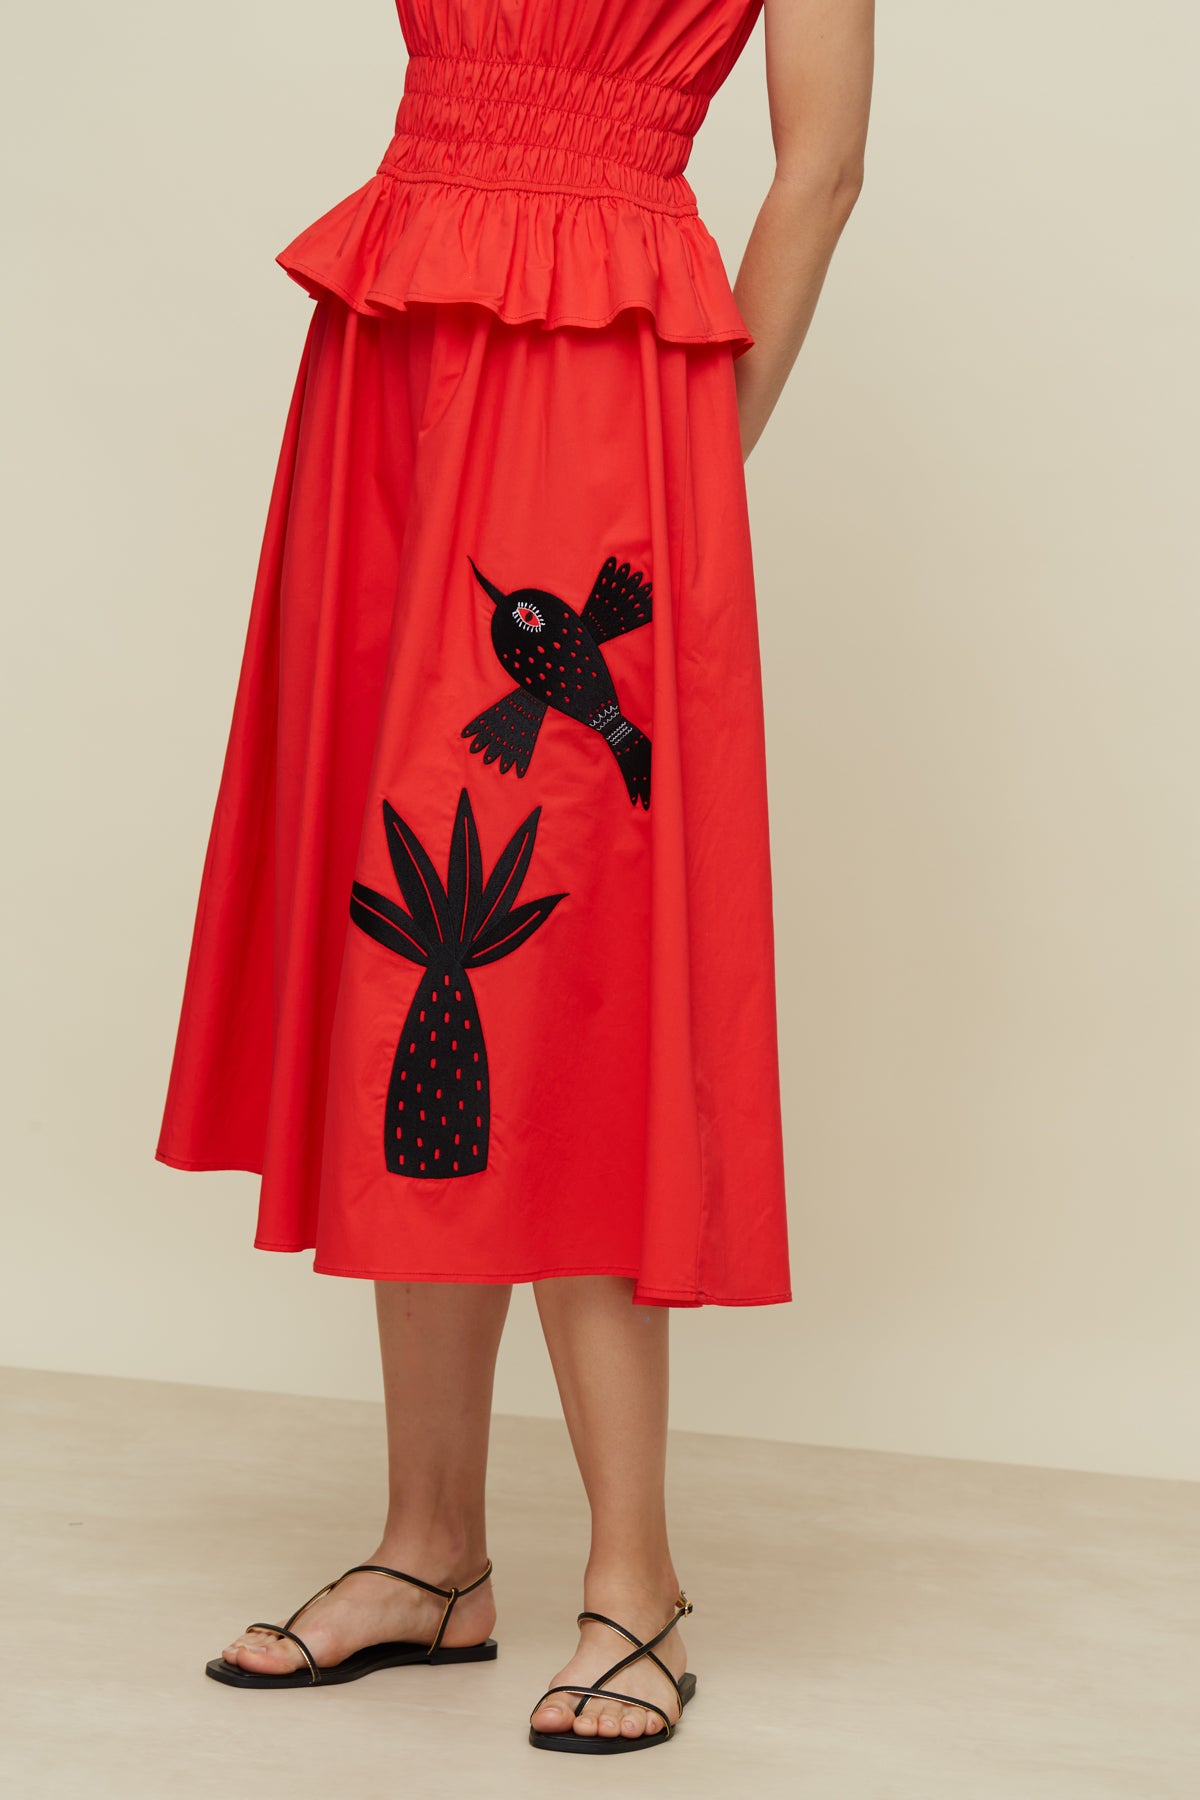 Galeria-Dayse Birds & Palm Red Dress-Justbrazil